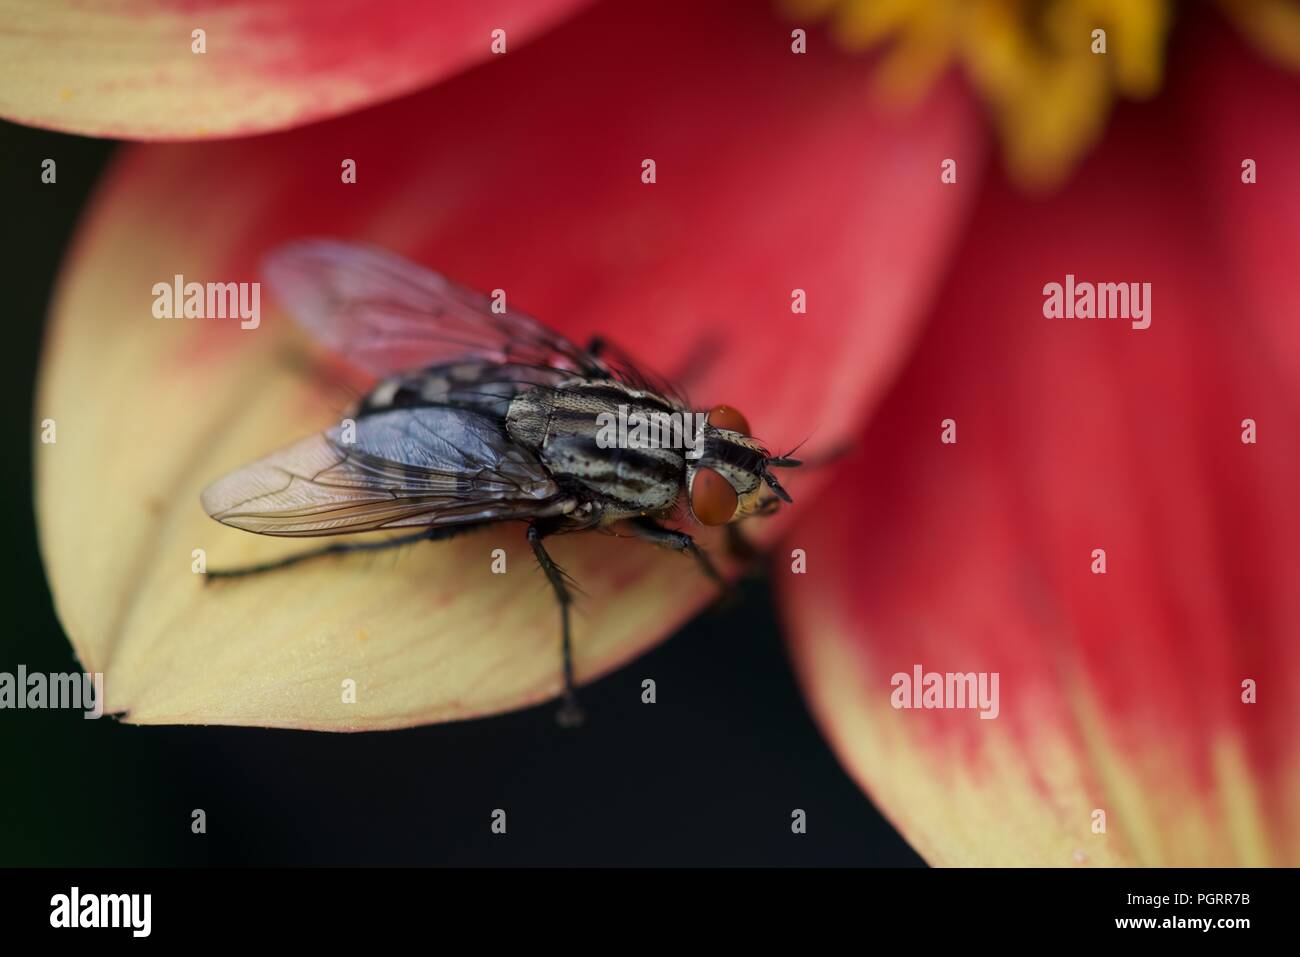 Horse-fly (Tabanoidea): a single horse-fly resting on a Dahlia petal Stock Photo